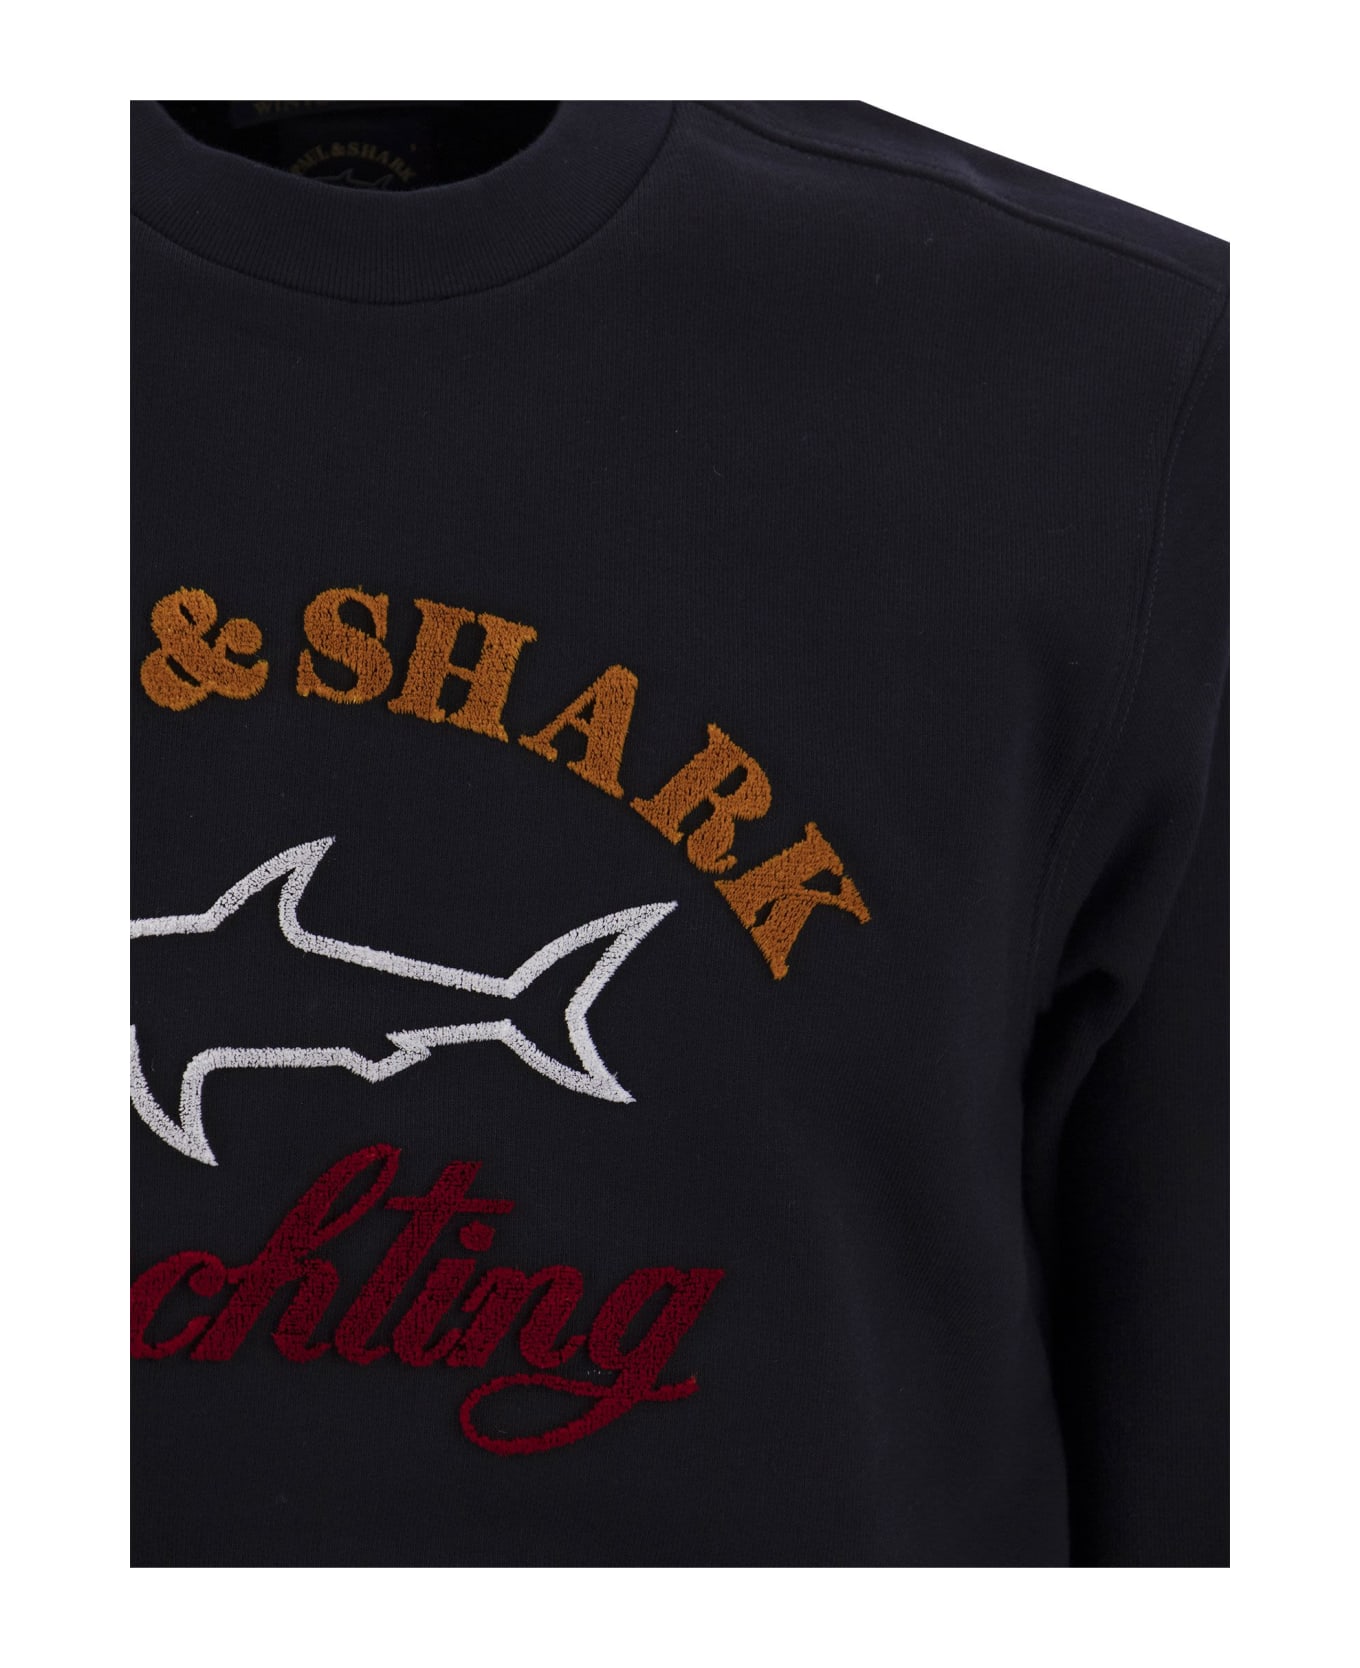 Paul&Shark Cotton Crewneck Sweatshirt With Logo - Navy Blue